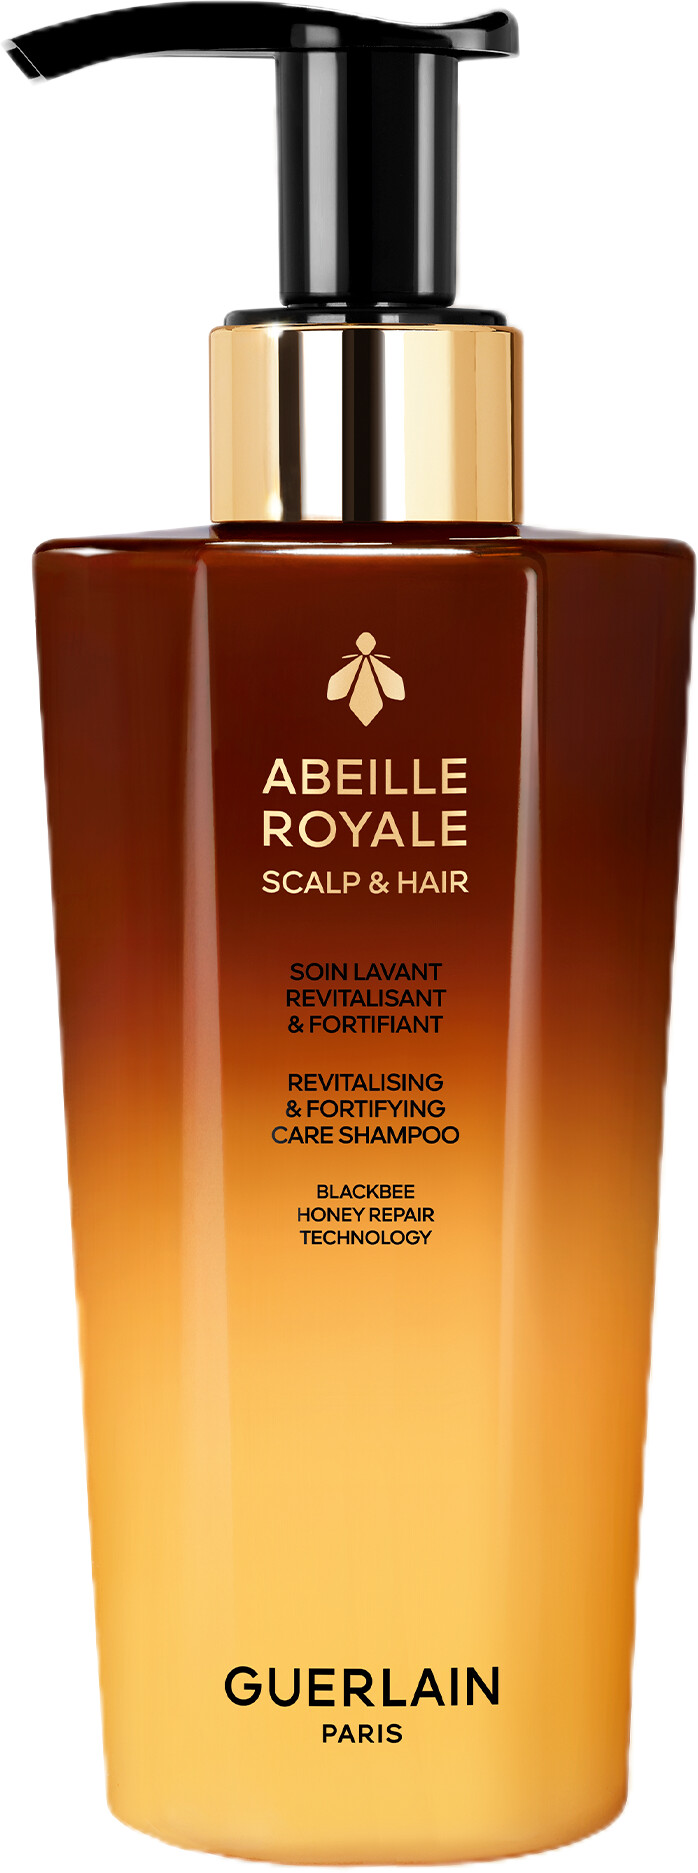 GUERLAIN Abeille Royale Scalp & Hair Revitalising & Fortifying Care Shampoo 290ml